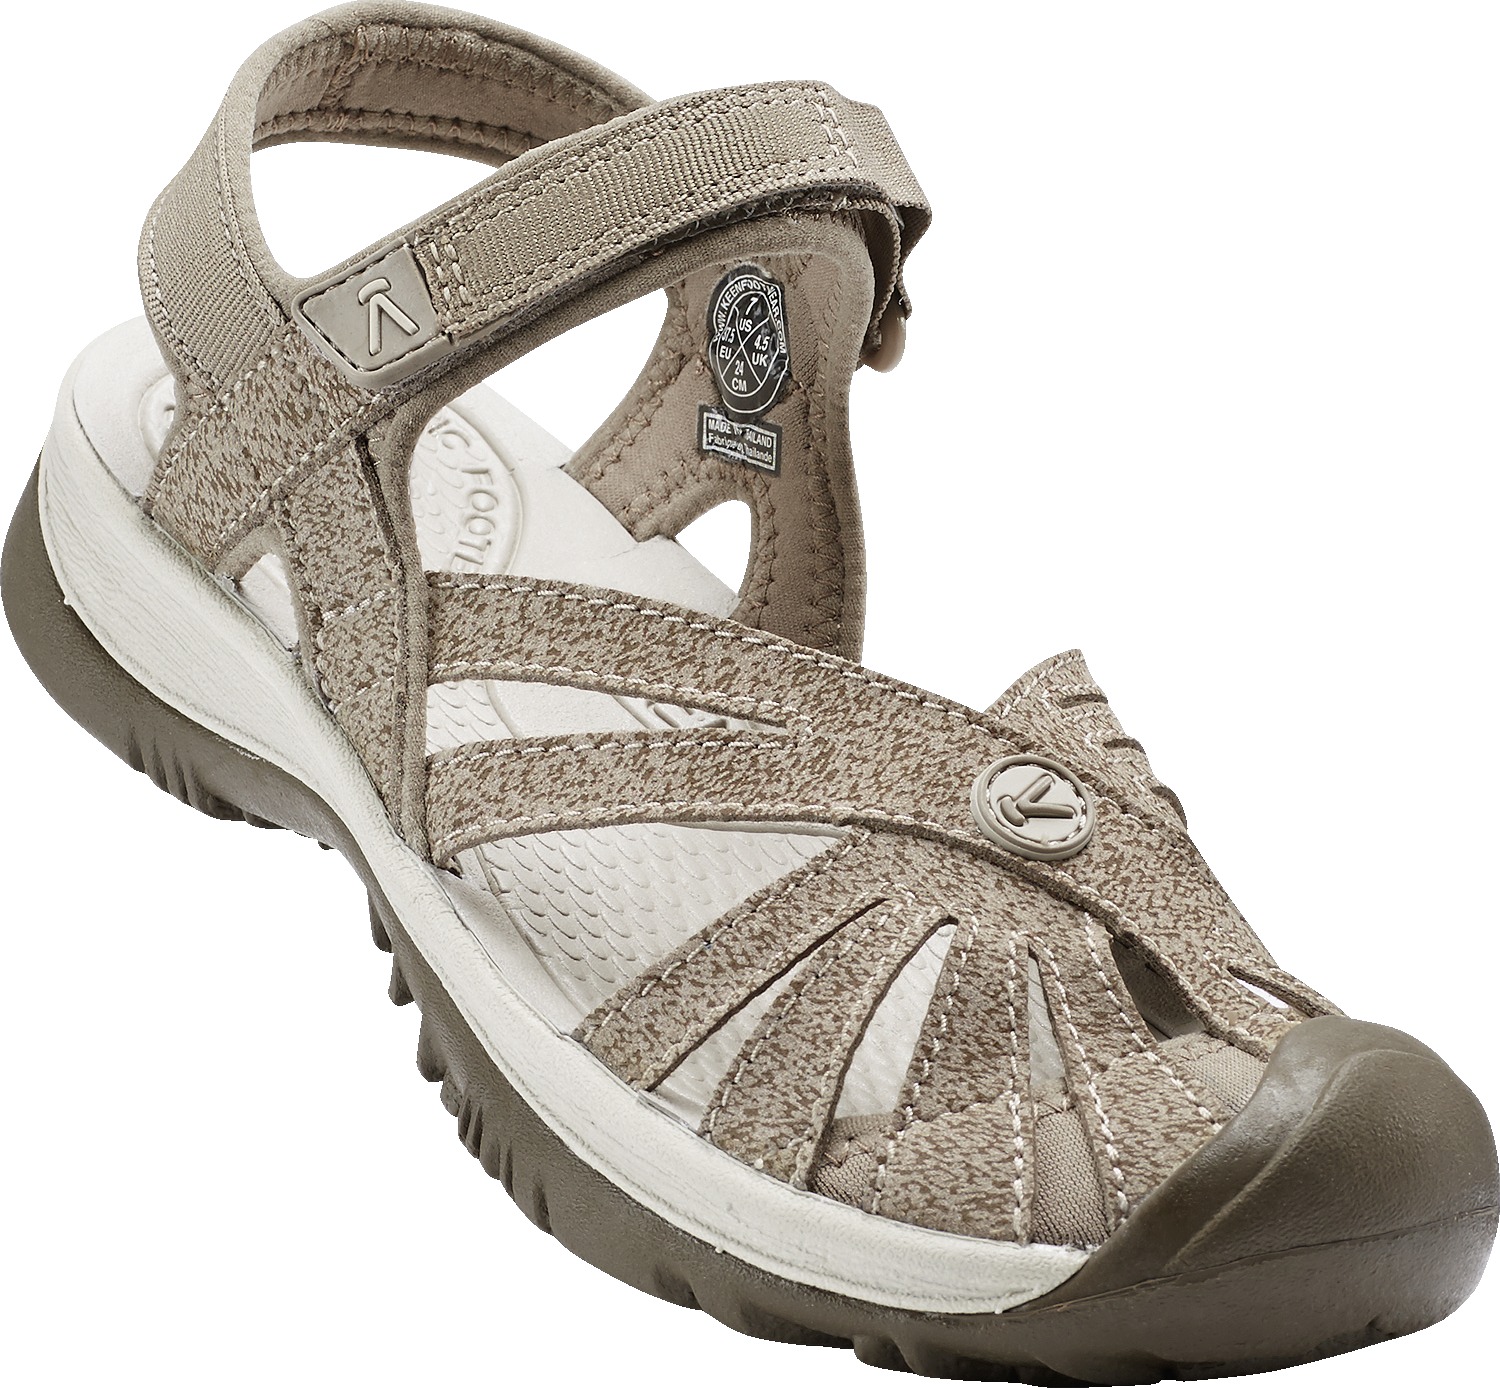 Keen dámské sandály Rose Sandal Women - Brindle/Shitake Barva: brindle/shitake, Velikost: 8 UK (41 EU / 27,5 cm)